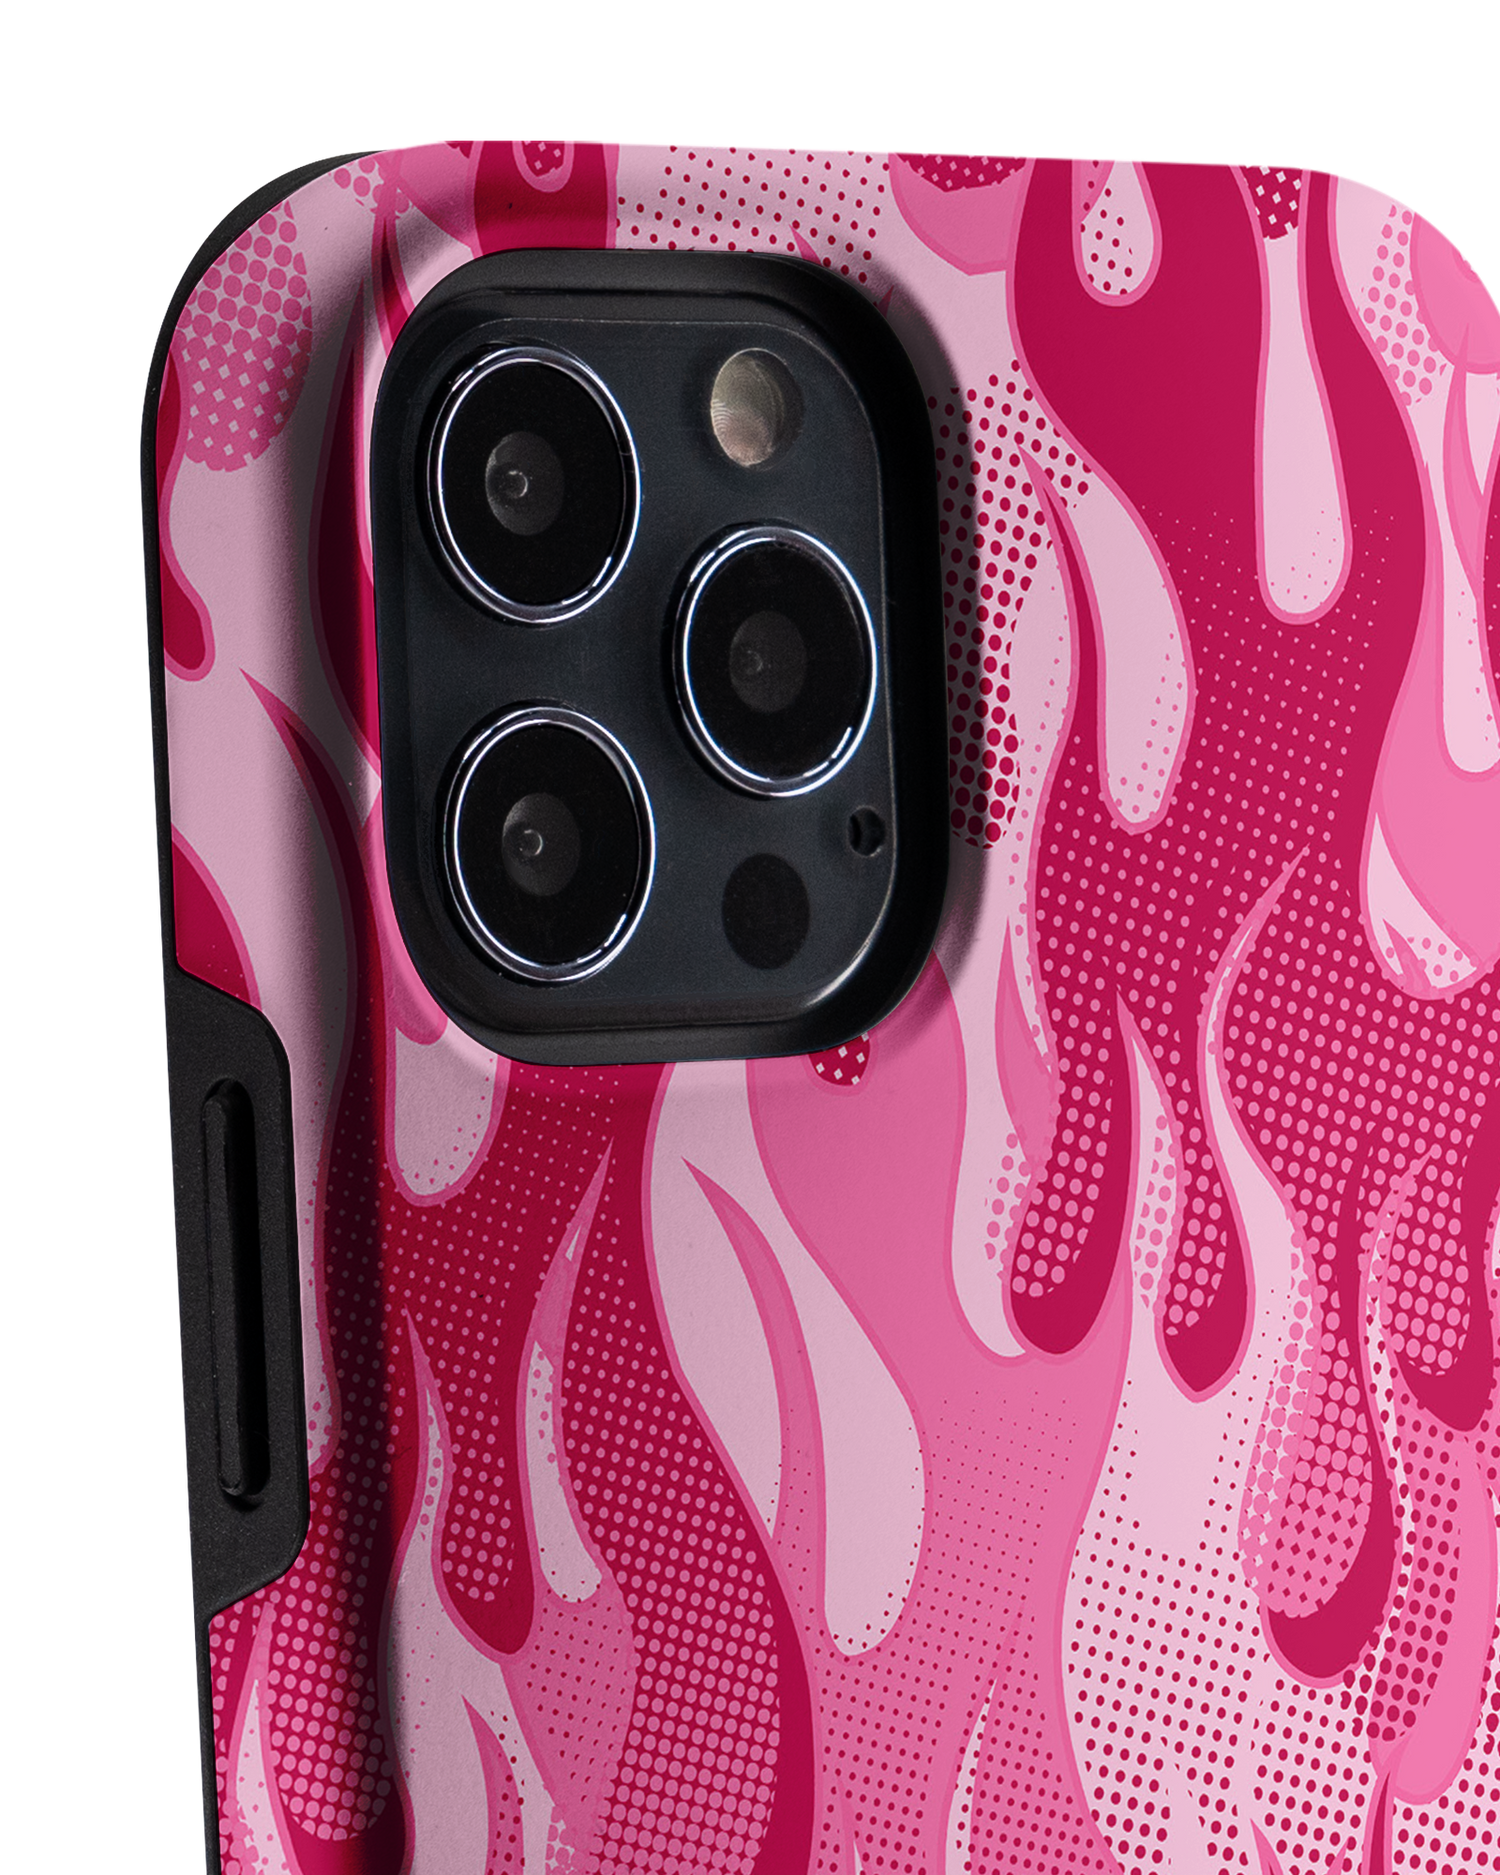 Pink Flames Premium Handyhülle Apple iPhone 12 Pro Max